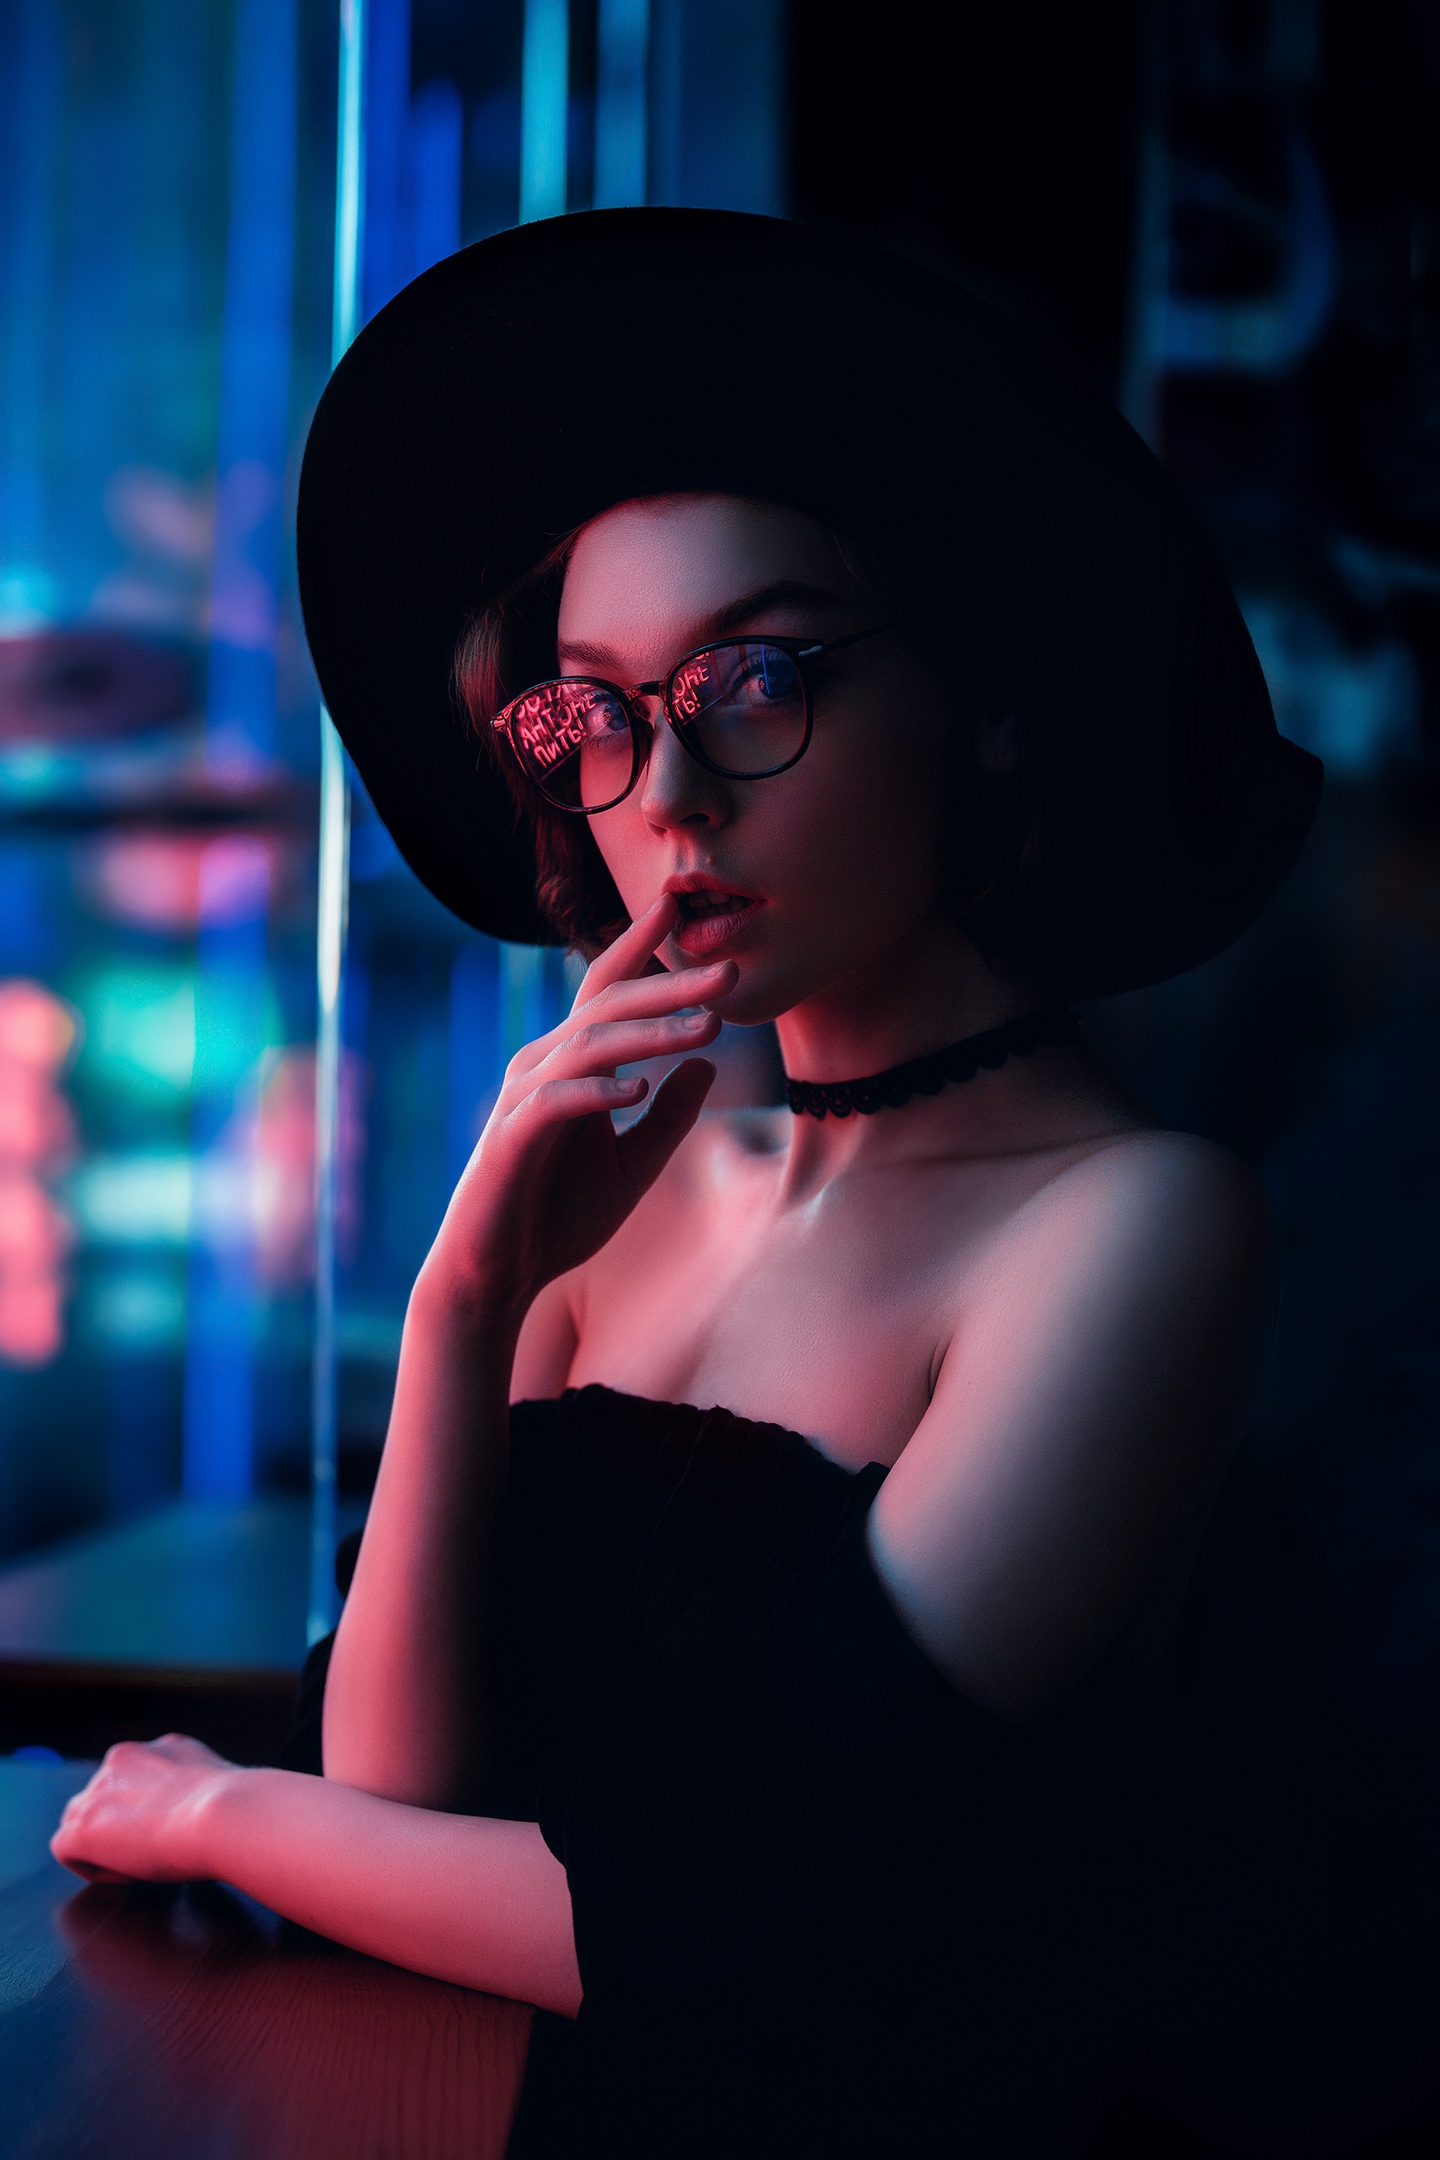 Olya Pushkina Karim Imamiev Neon Women Model Hat Glasses Women With Glasses Parted Lips Finger On Li 1440x2160